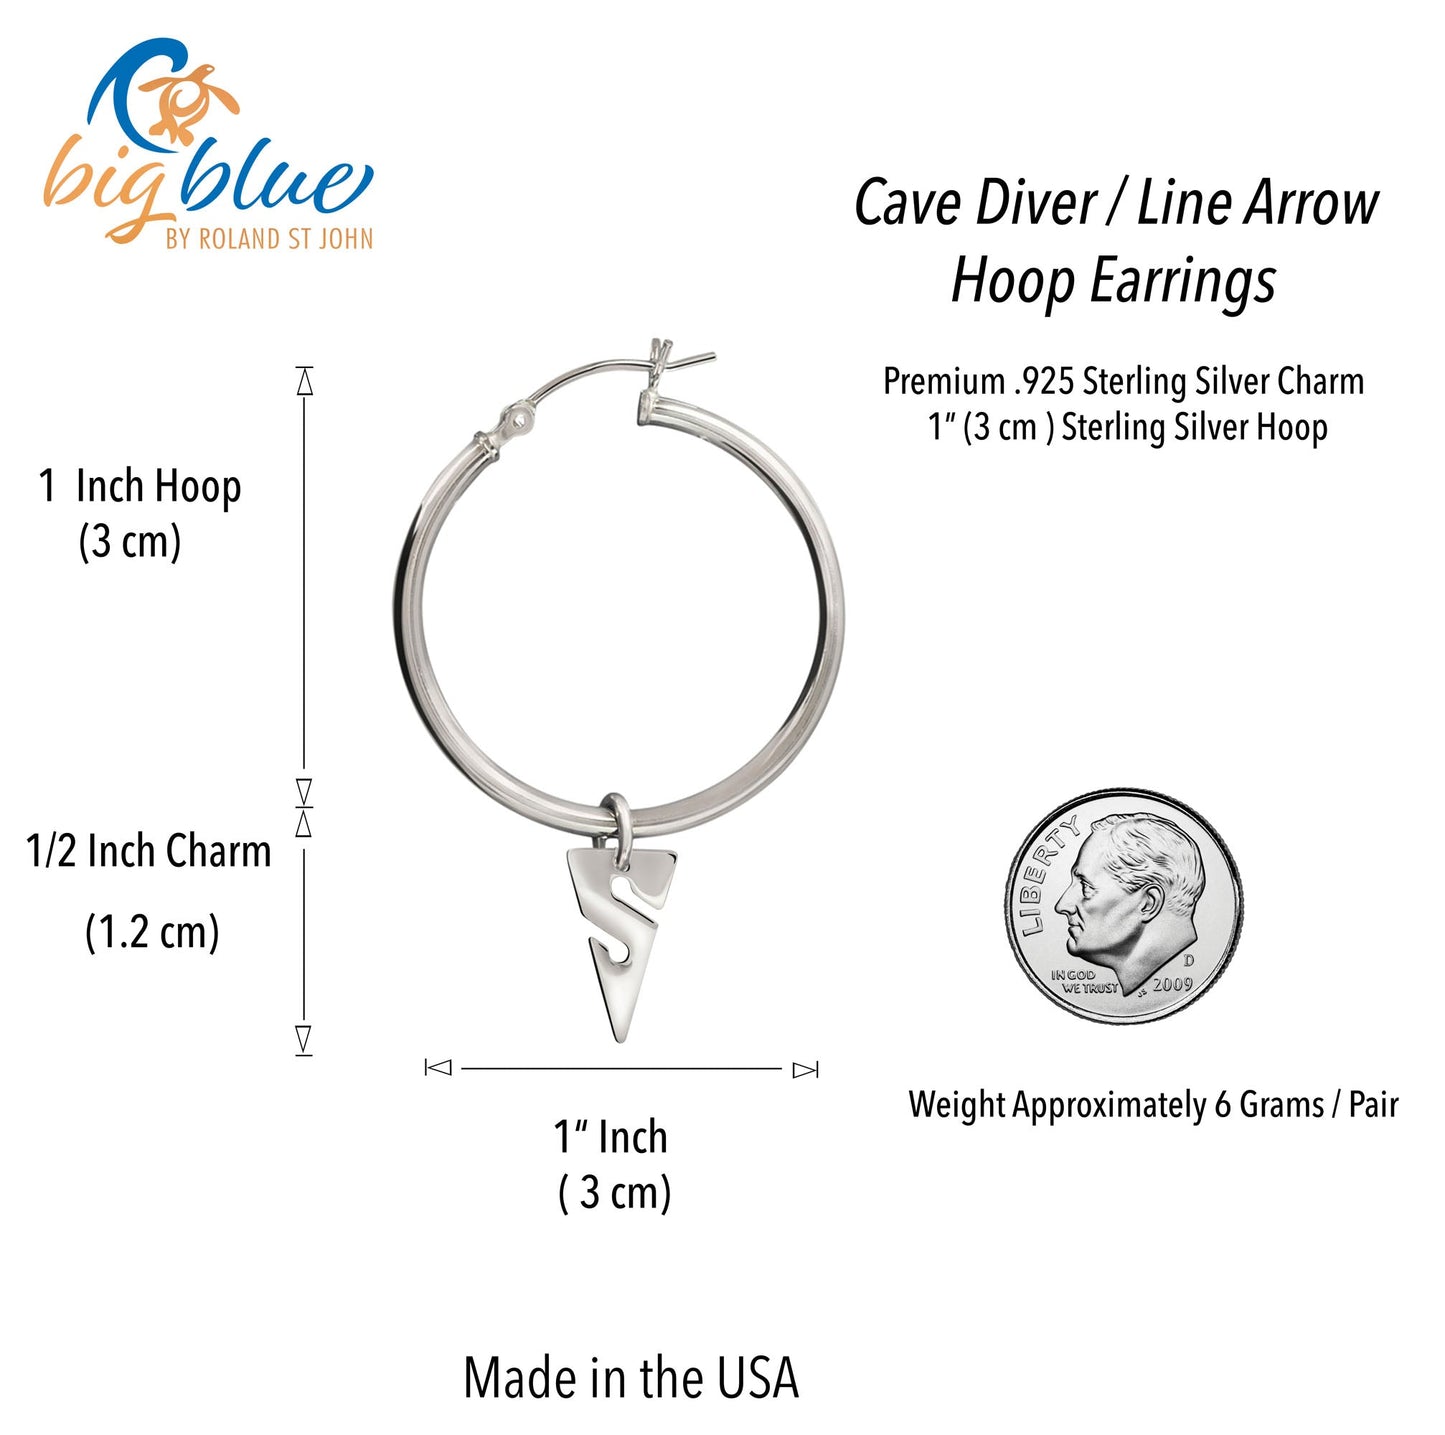 Line Arrow Sterling Silver Hoop Earrings- Earrings for Scuba Divers, Cave Diver Line Arrow Sterling Silver Drop Earrings - The Tool Store